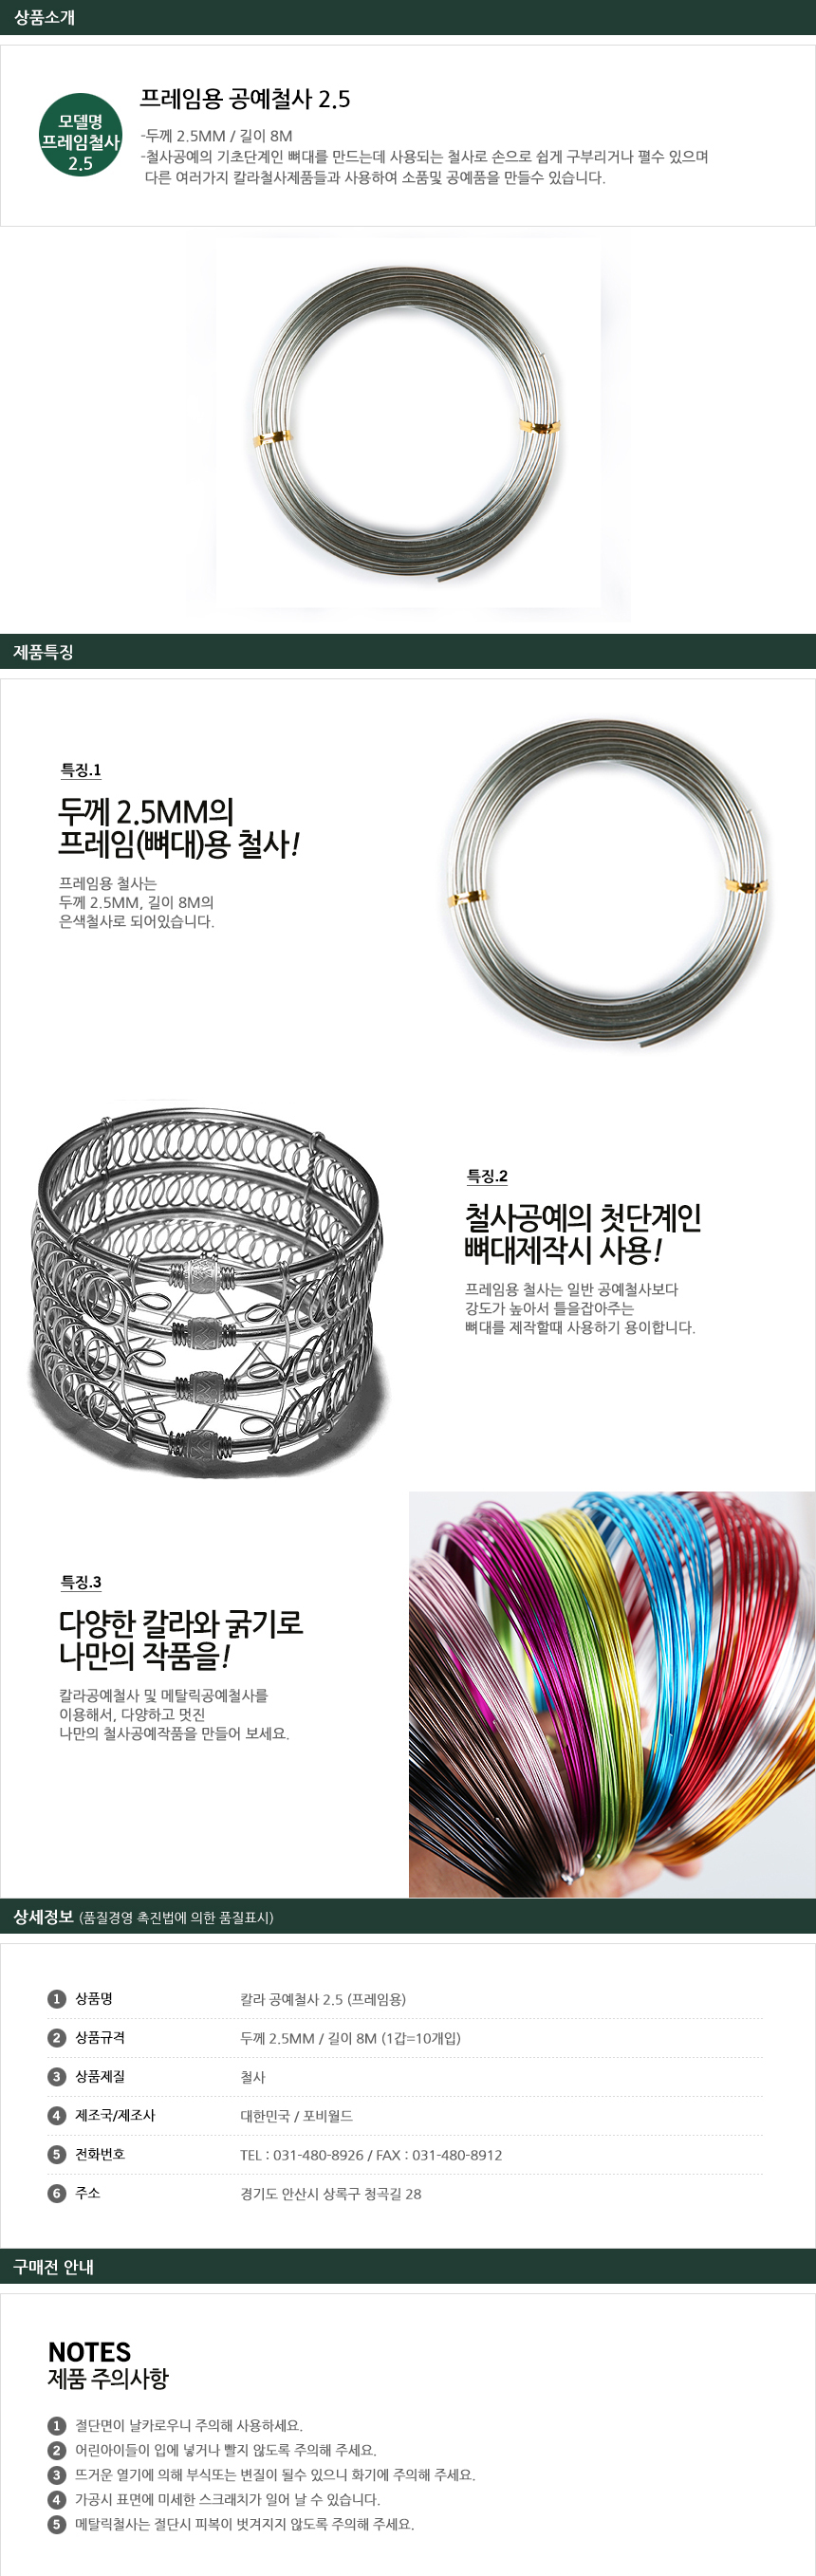 FOBWORLD] Metallic Craft Wire 6.0